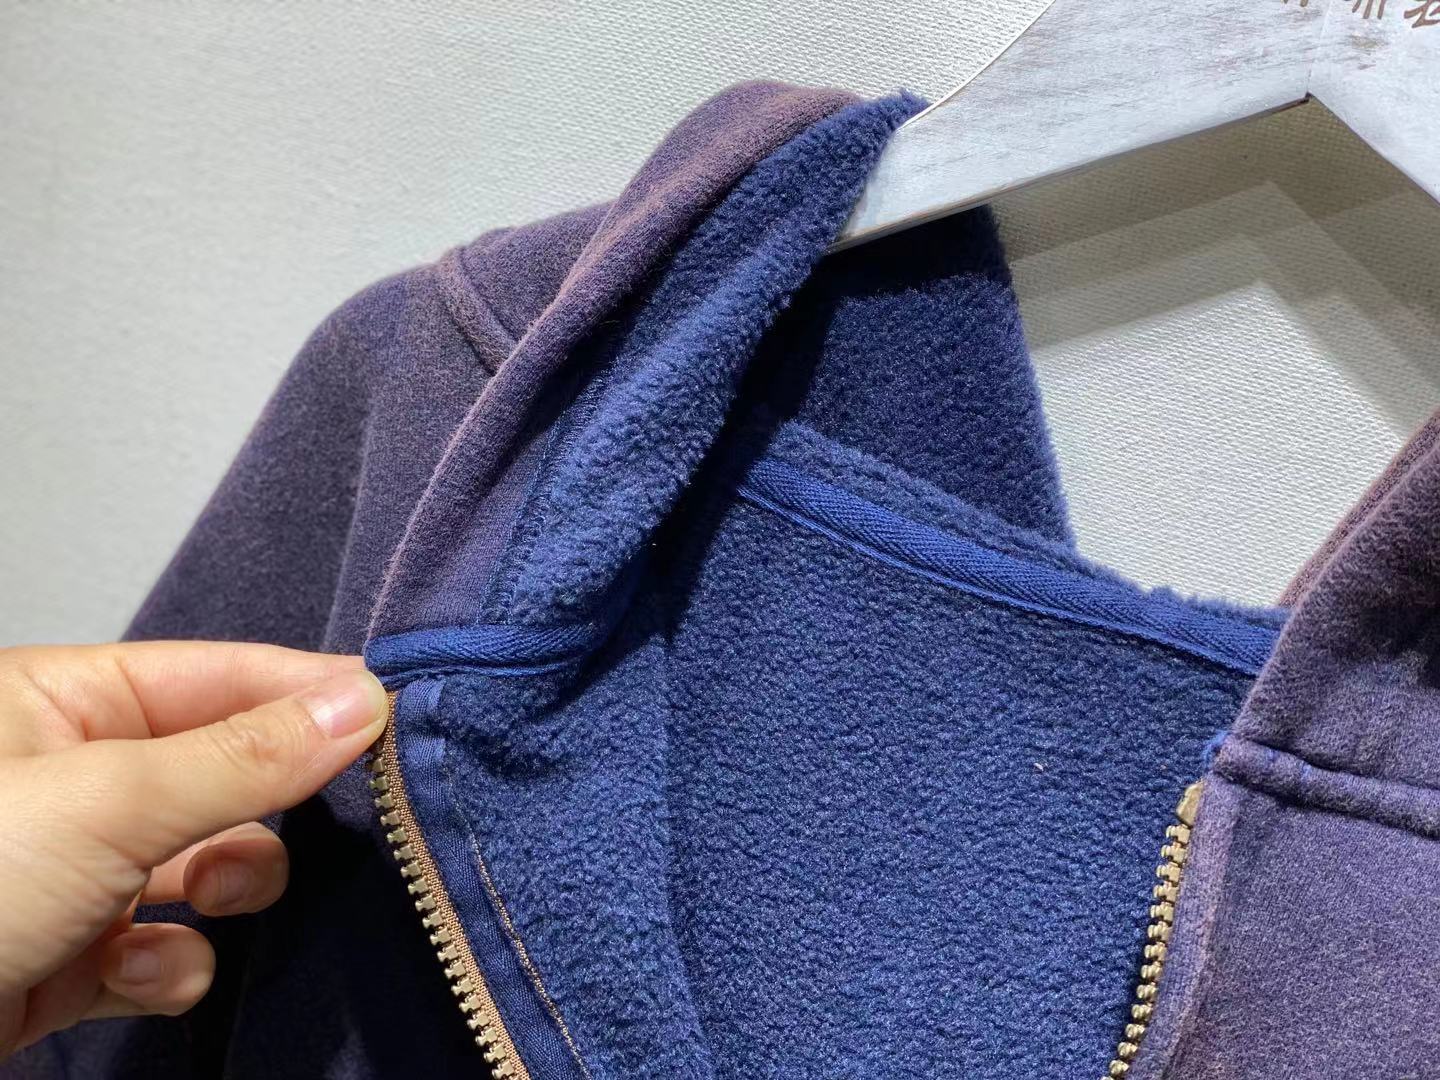 HUILI FACTORY custom heavyweight vintage zip up hooded jacket thick fleece acid retro stone wash hoodie